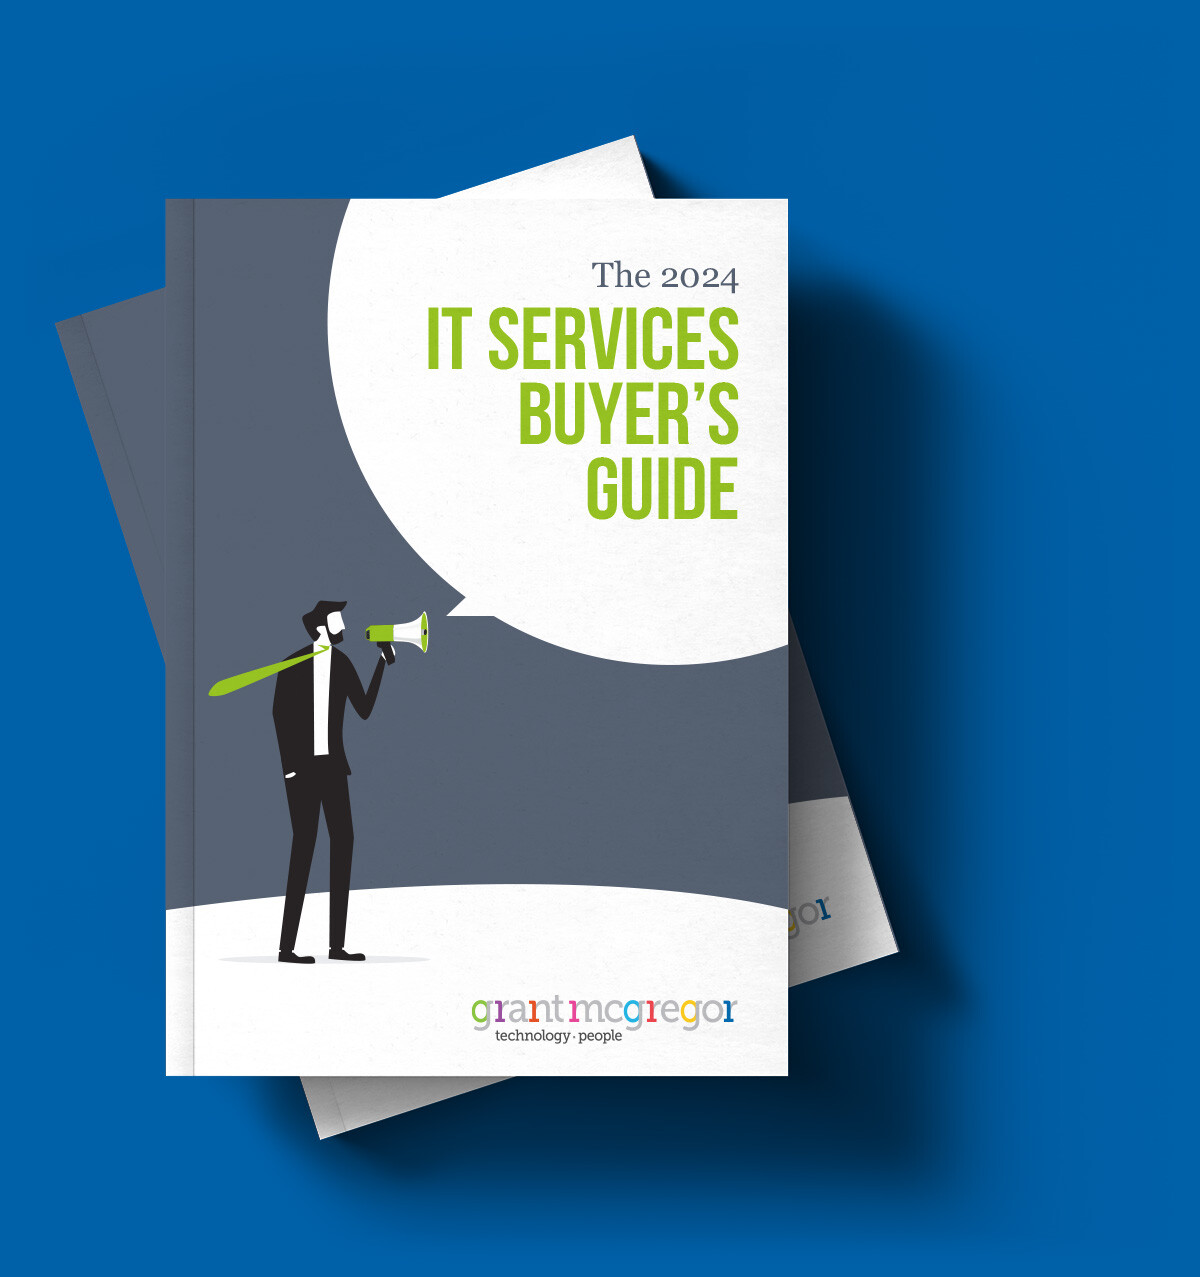 IT Buyers Guide - Promo Image - Blue BG